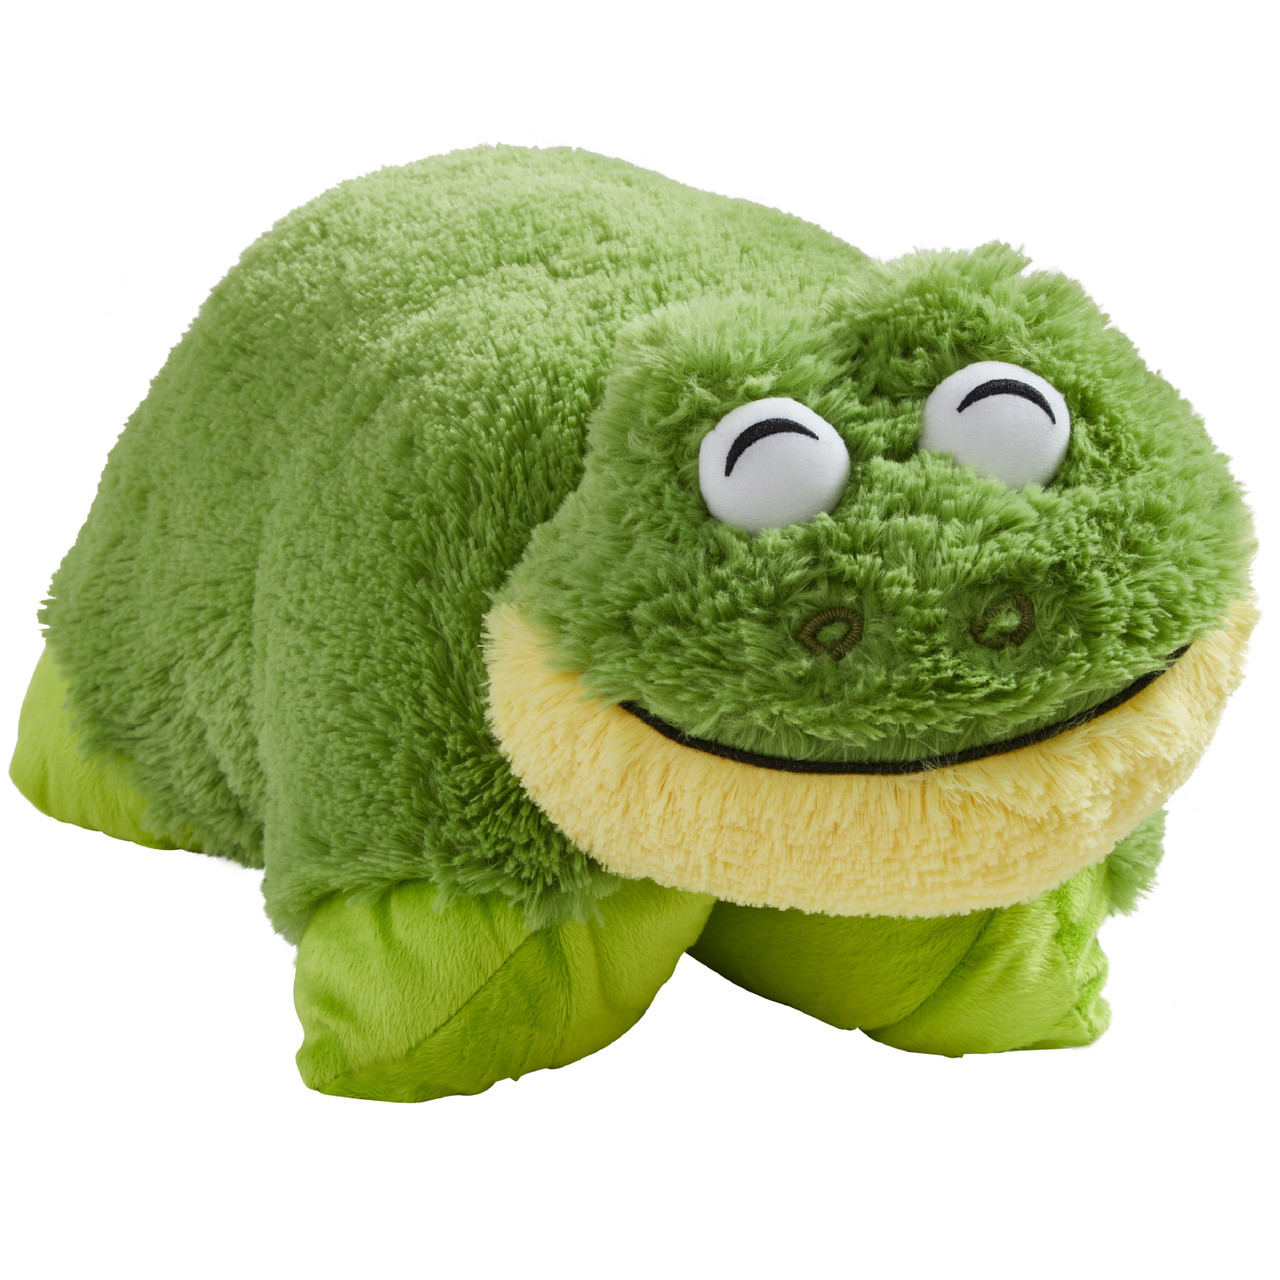 Pillow Pets Friendly Frog 18 Stuffed Animal Plush Toy, Green